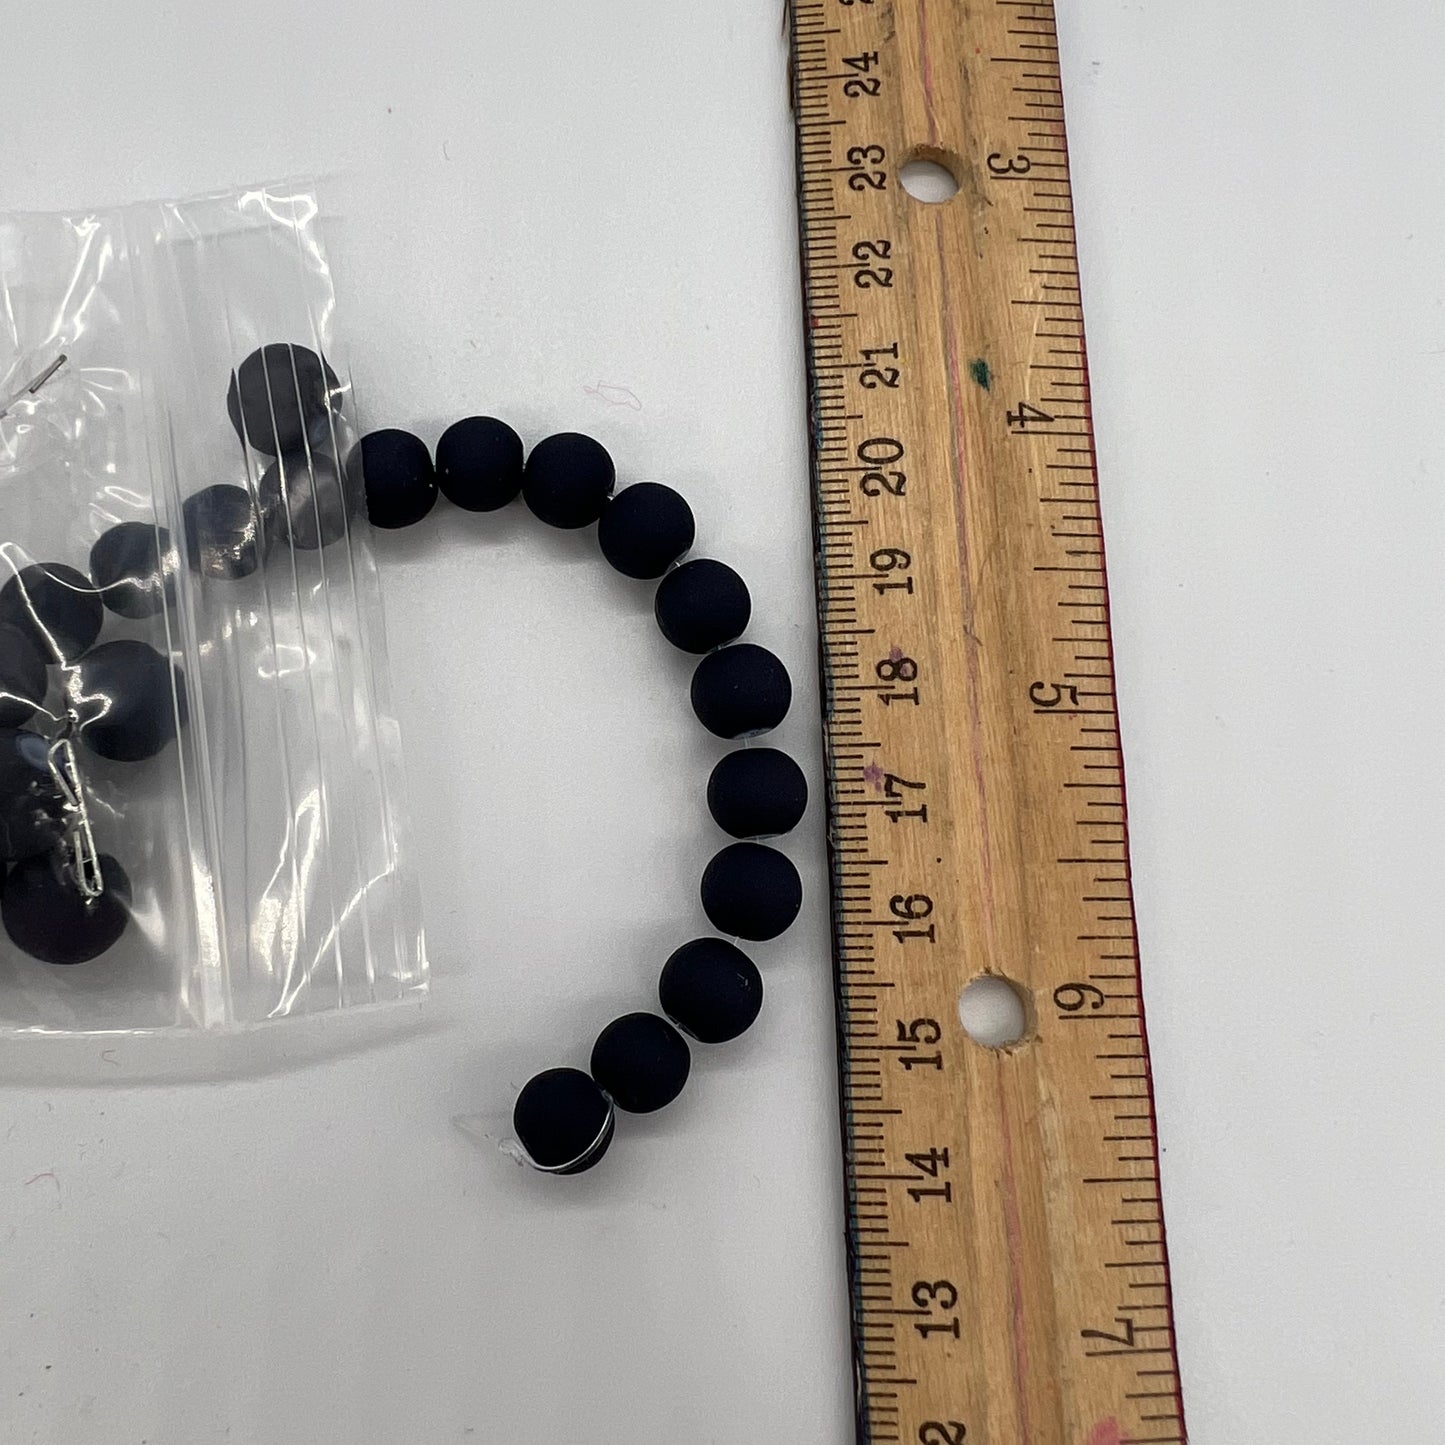 Dark Blue Beads